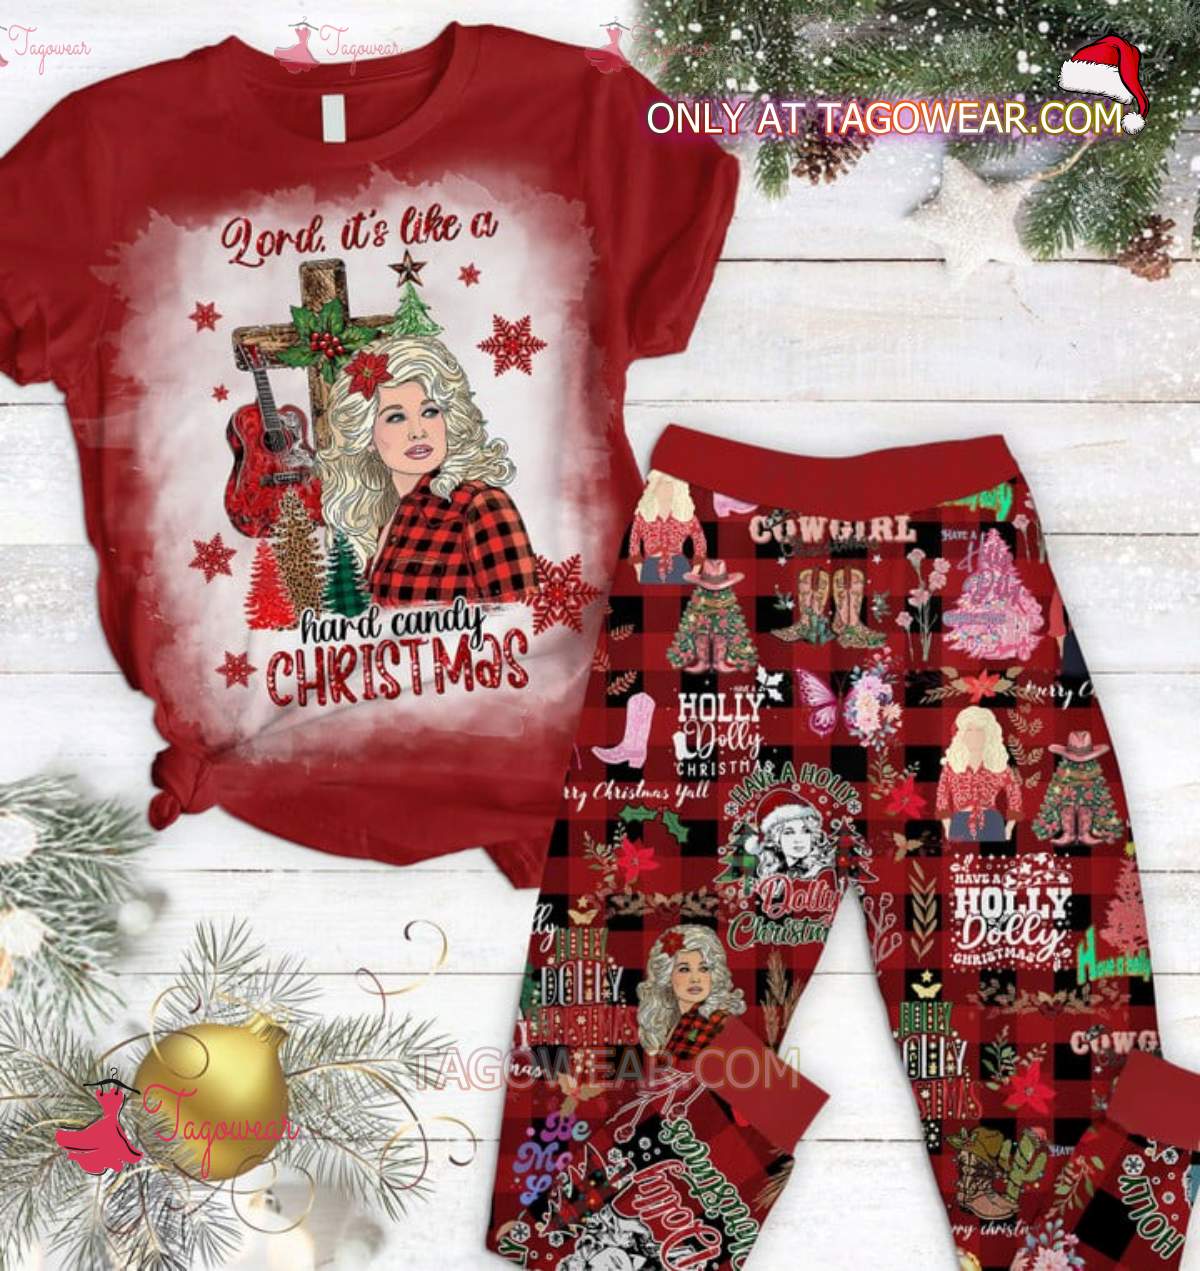 Dolly Parton Lord It's Like A Hard Candy Christmas Pajamas Set